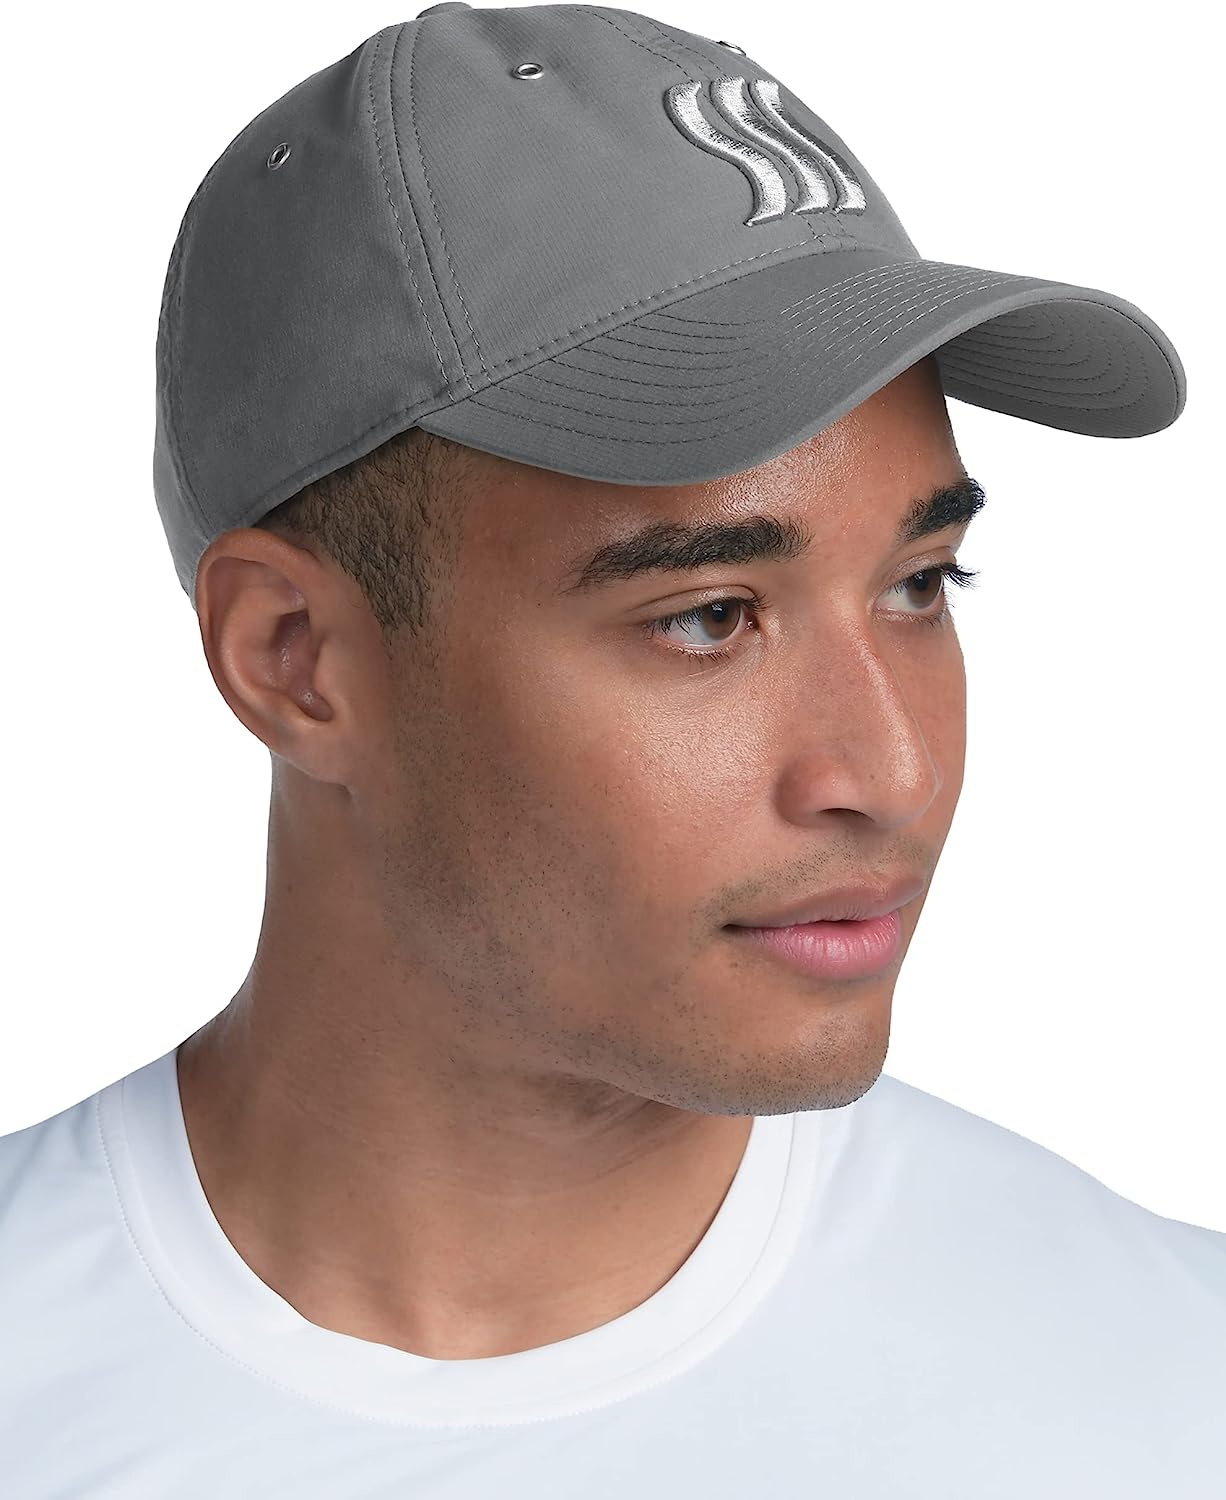 SAAKA Max Dry Hat for Men & Women. Sweat Wicking & Quick-Dry Cap